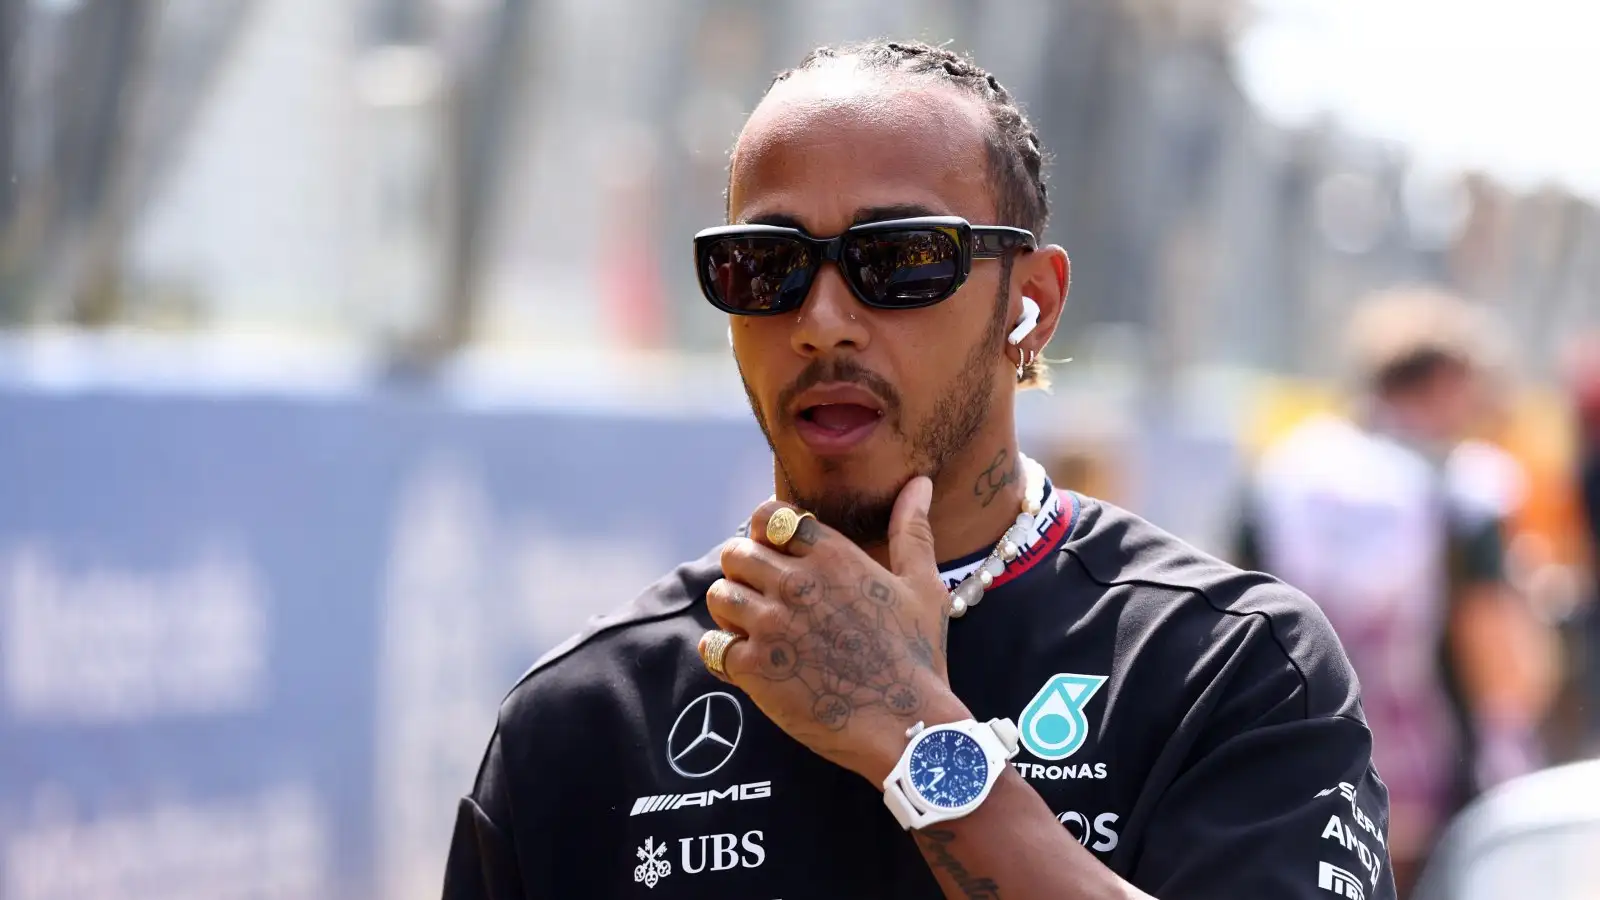 Lewis Hamilton makes his way through the paddock area at the Italian Grand Prix.